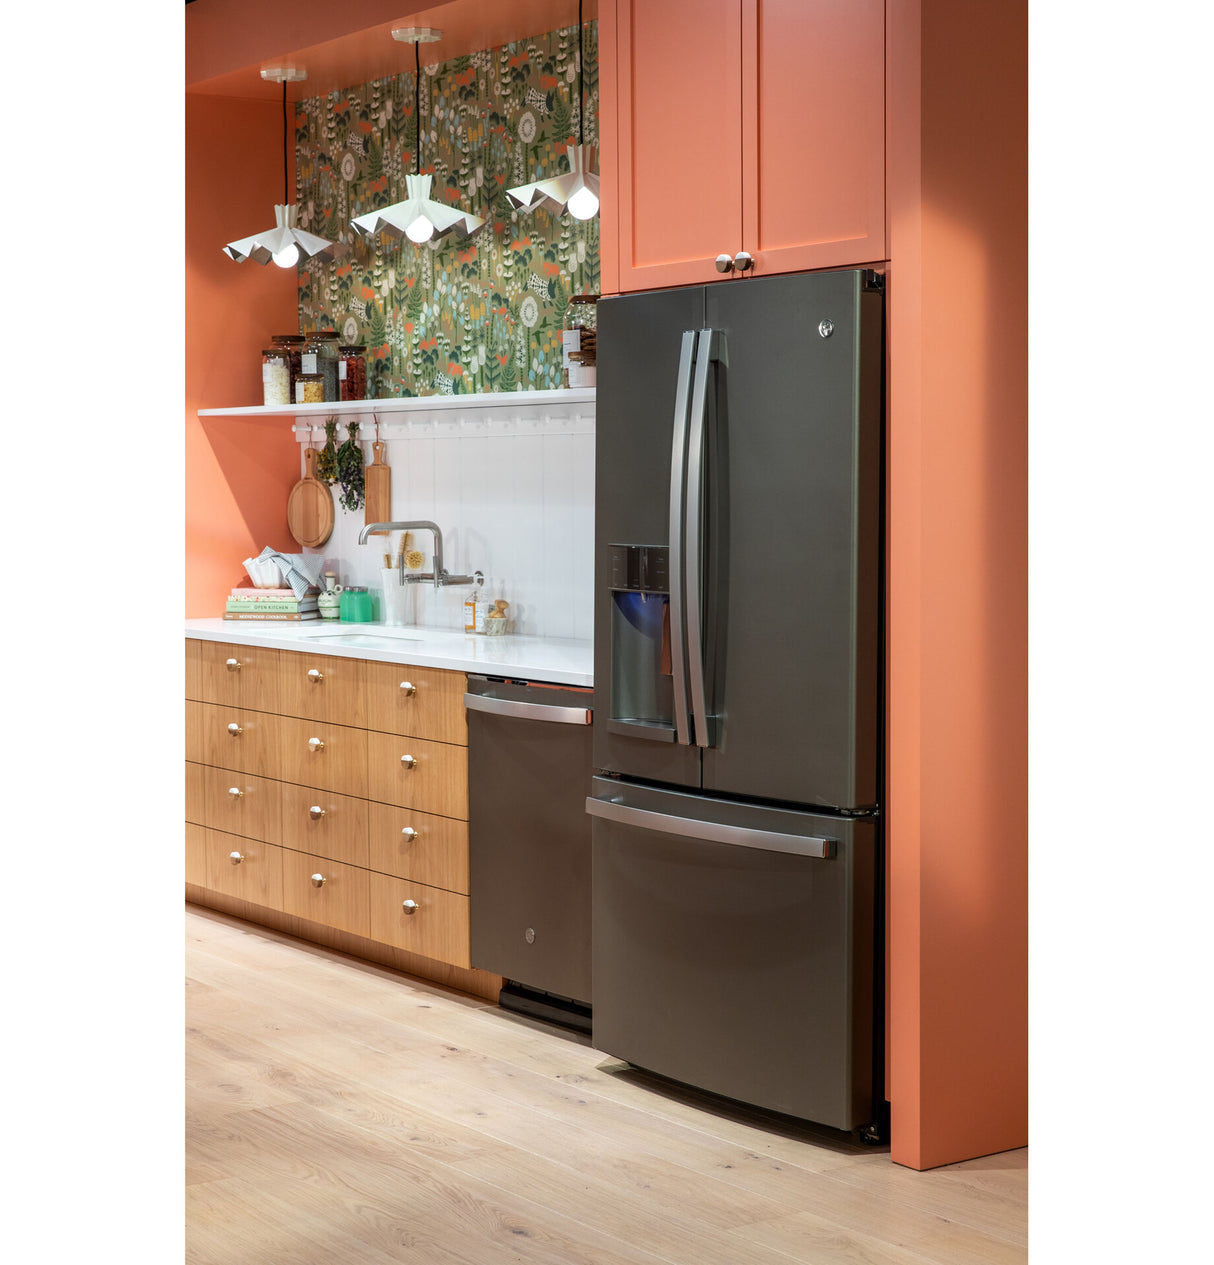 GE(R) ENERGY STAR(R) 22.1 Cu. Ft. Counter-Depth French-Door Refrigerator - (GYE22GMNES)